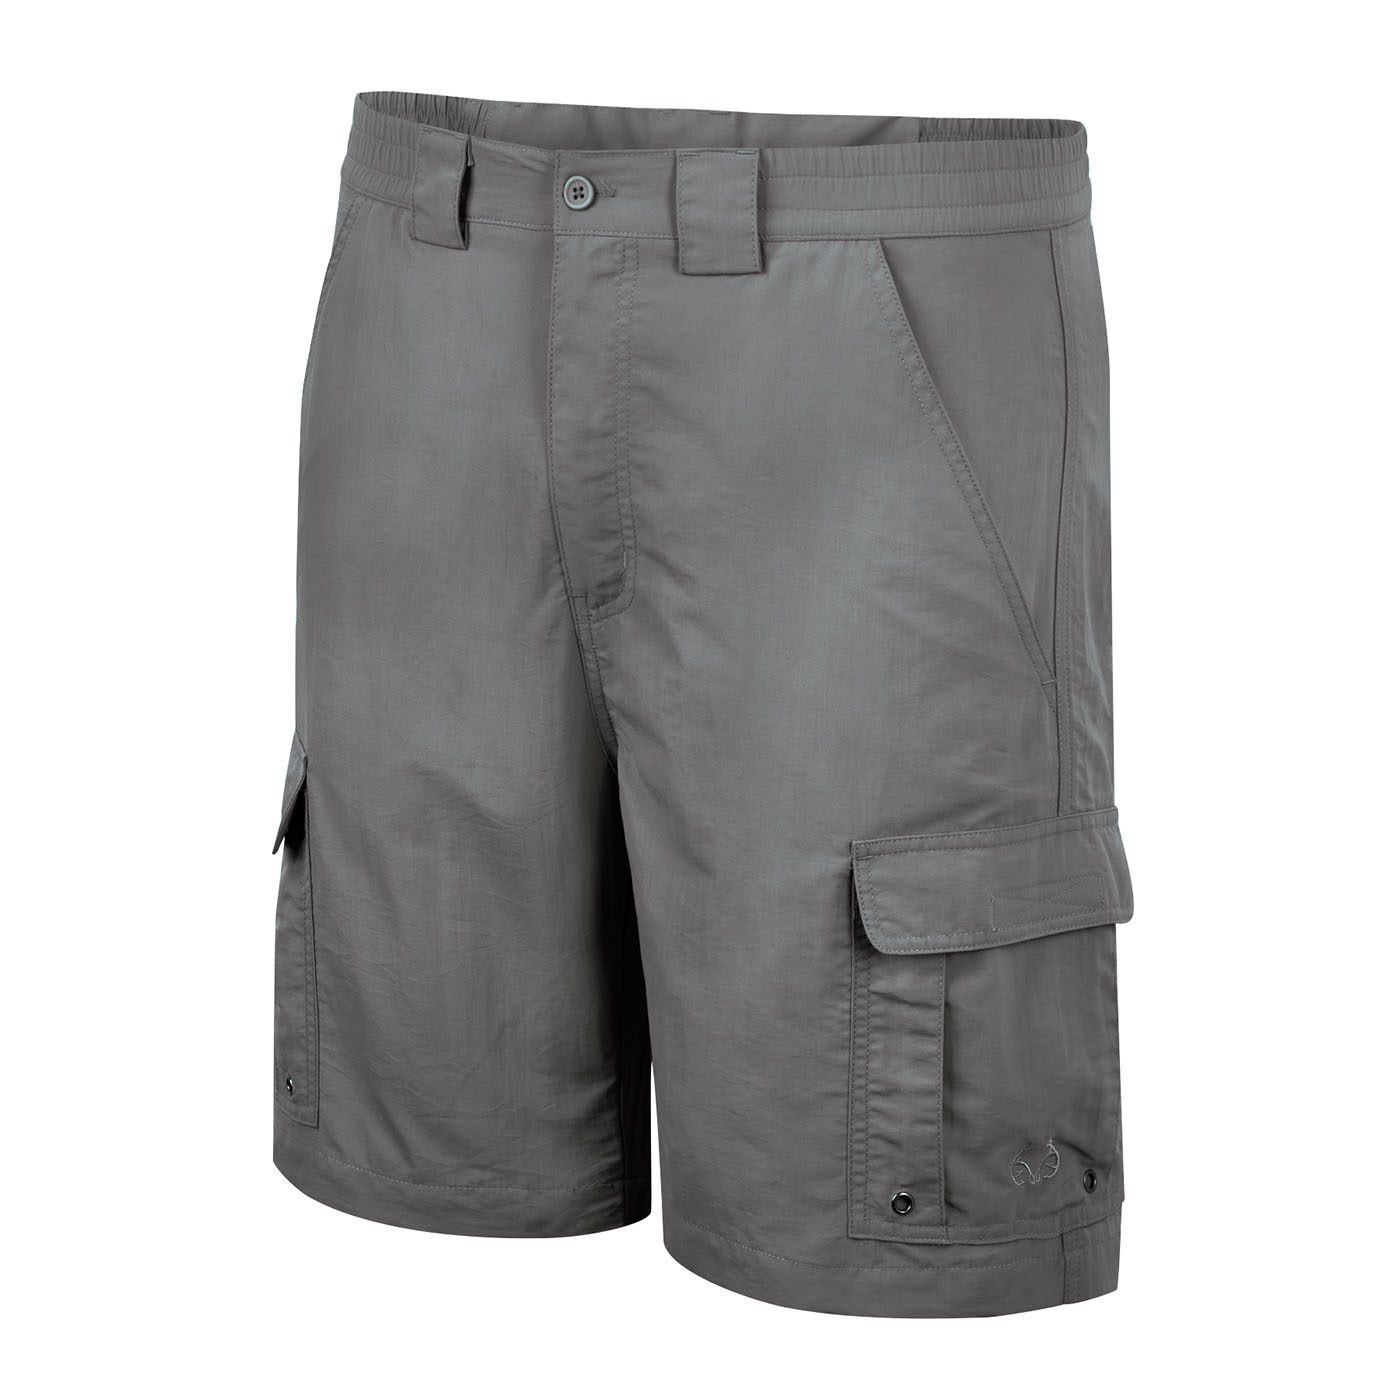 Realtree Men's FishingDeckhand Quick Dry Cargo Shorts